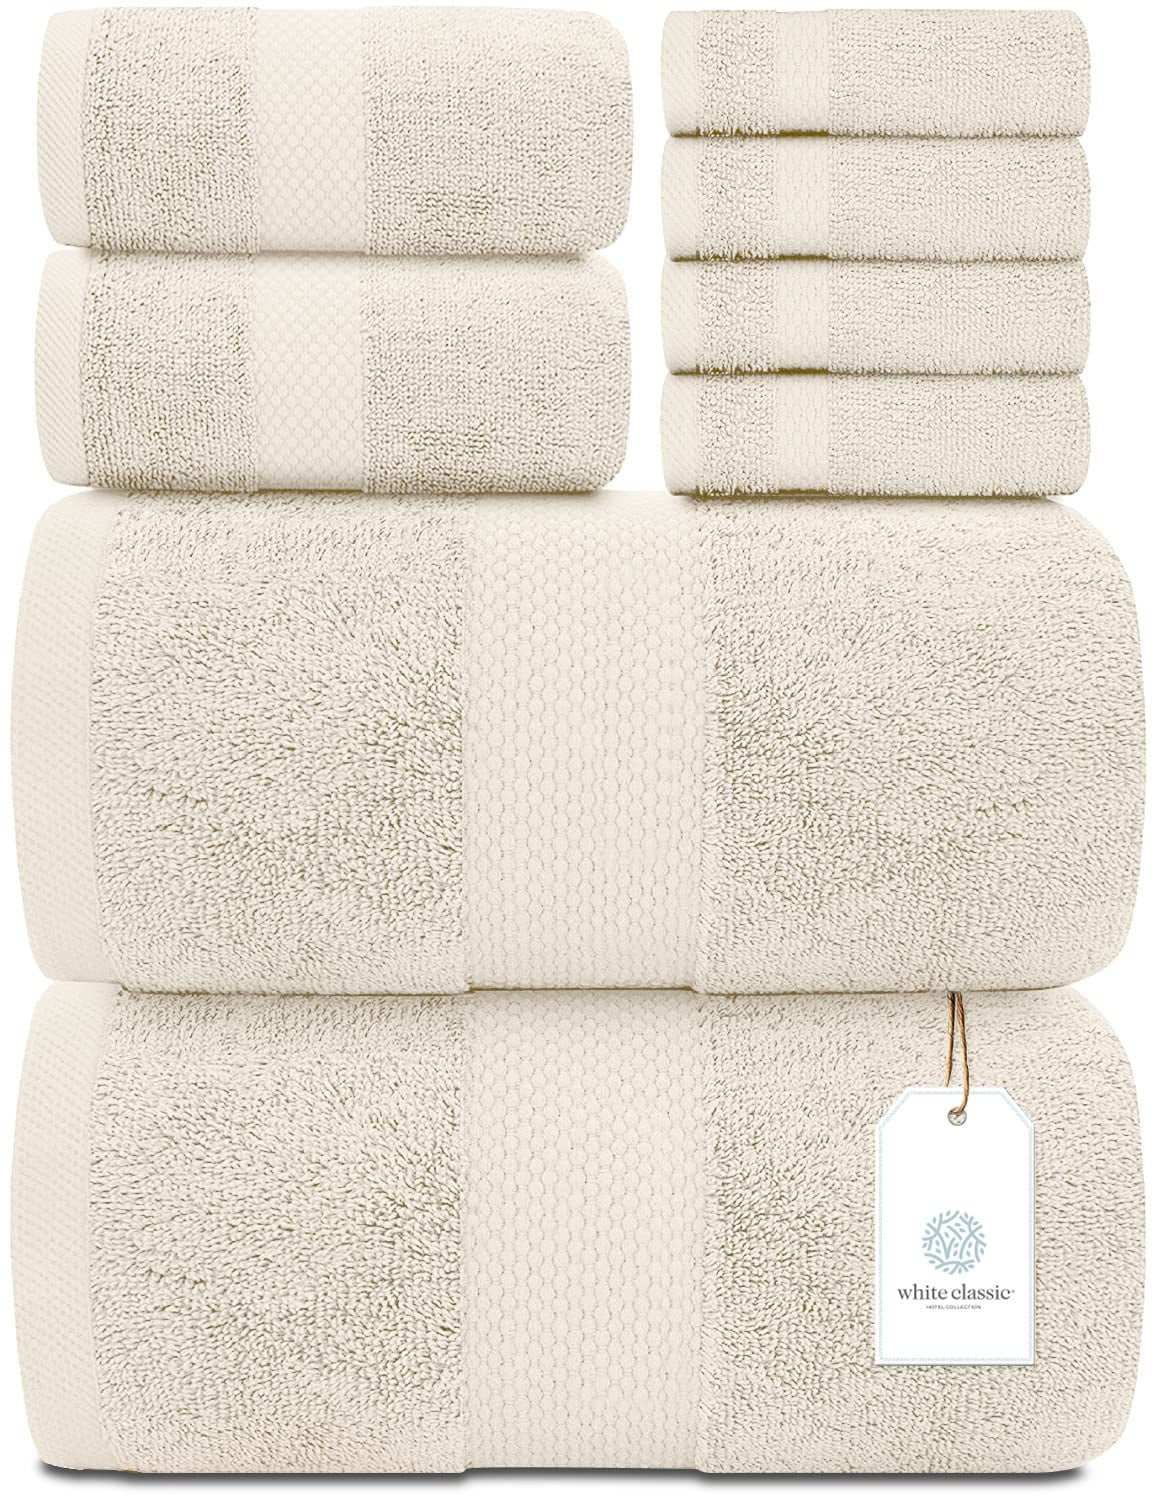 White Classic Luxury Black Bath Towel Set - Hotel Soft Cotton 2/bath 2/Hand 4/Wash - 8 Piece, Size: 2XL 27x54 2x 16x30 4XL 13x13